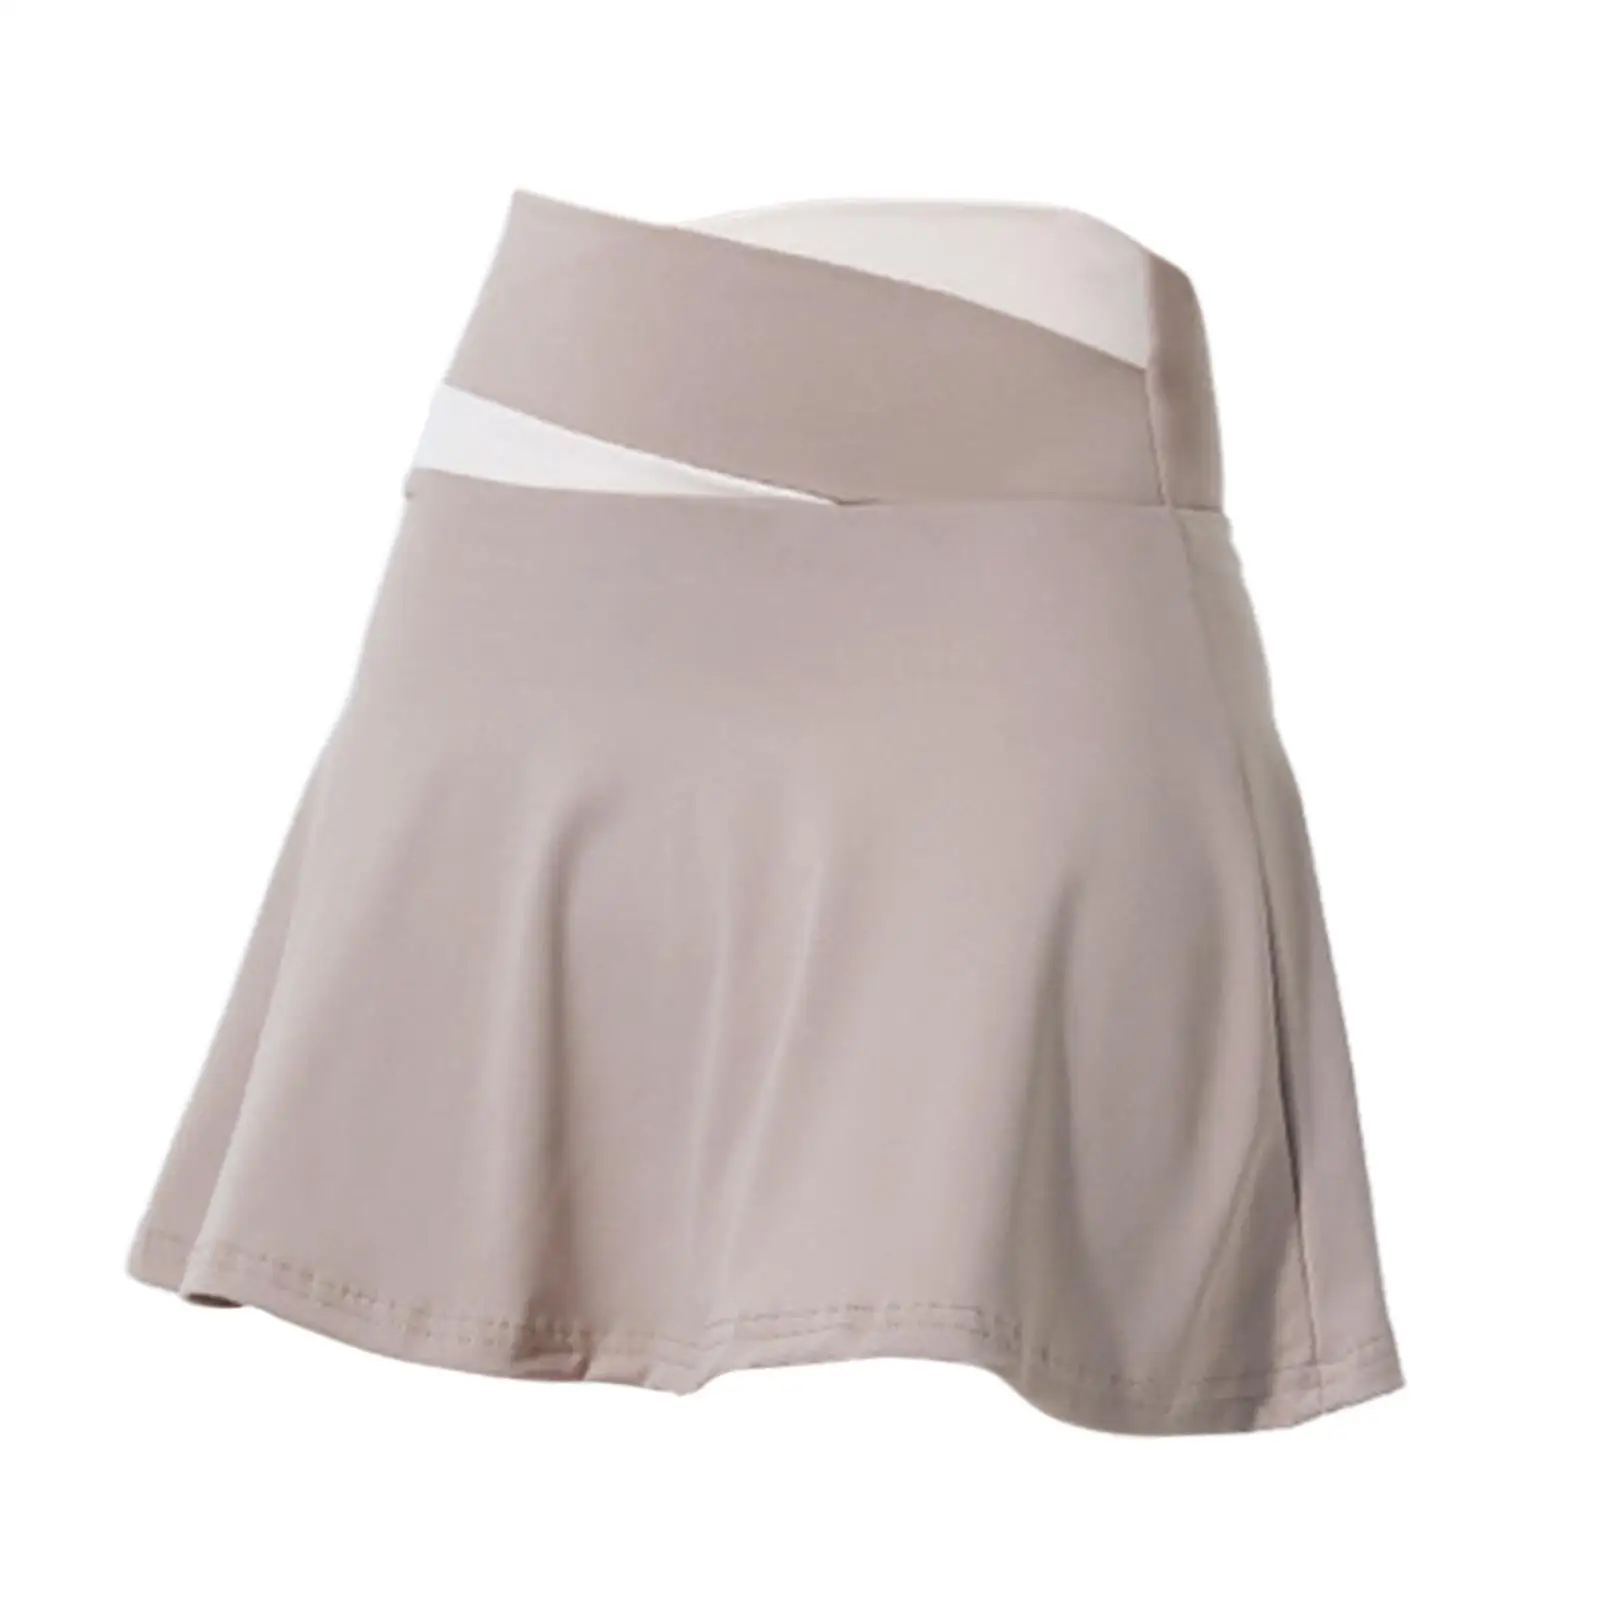 Tennis Skirt Short Skirts Mini Skirt Lightweight Clothing Athletic Ladies Soft Badminton Skirt for Golf Sport Workout